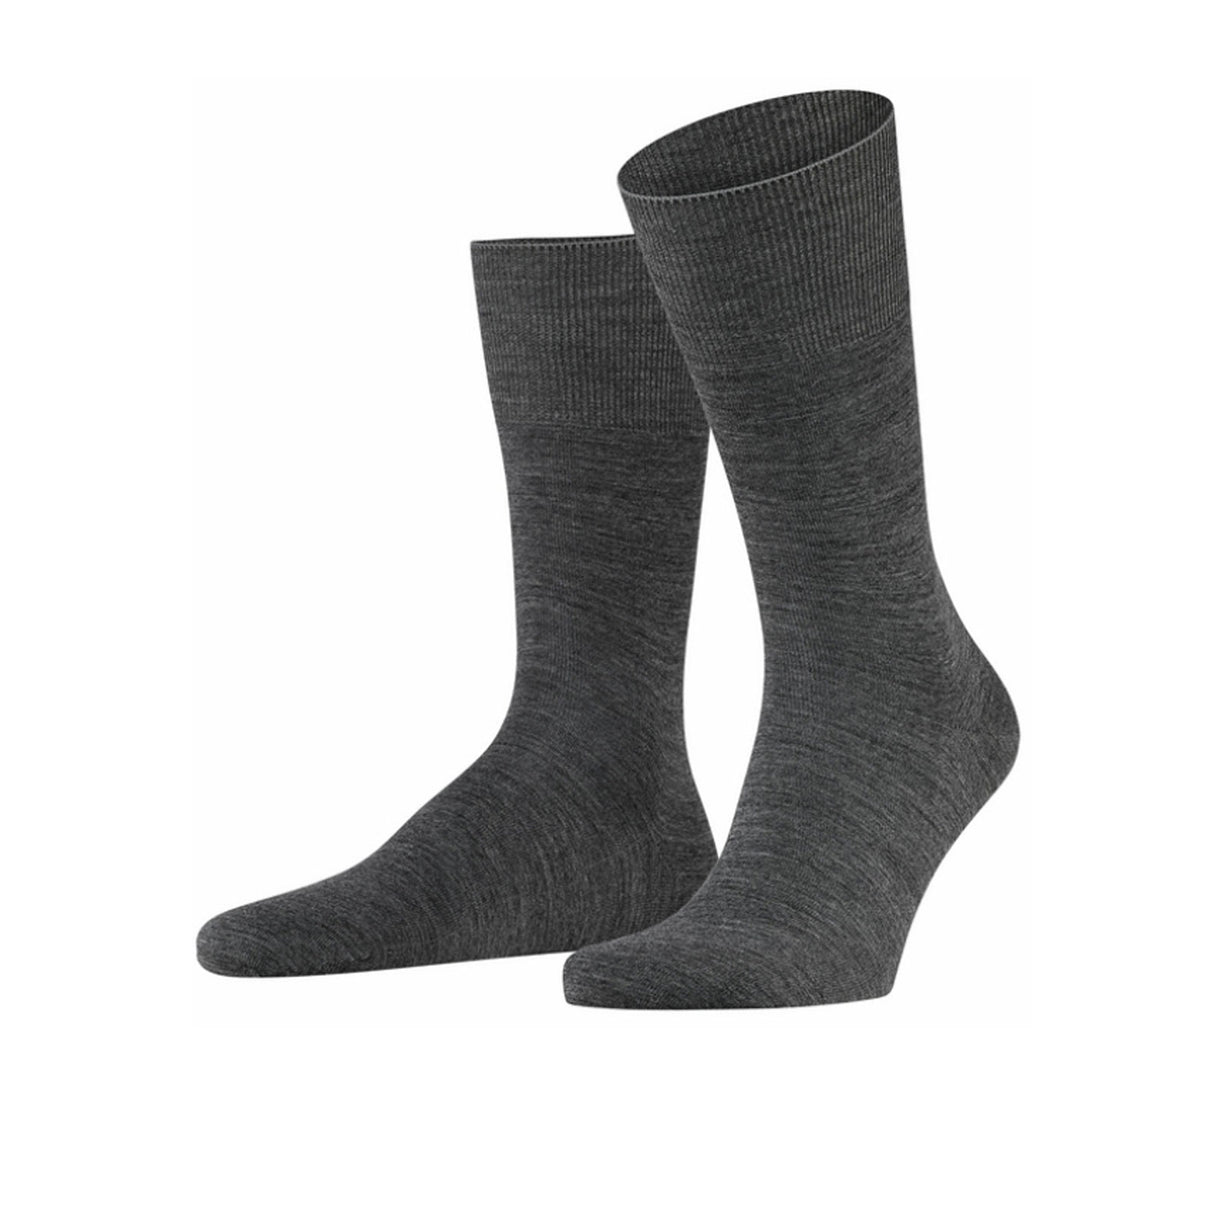 Falke Airport (Unisex) - Dark Grey Metallic Accessories - Socks - Lifestyle - The Heel Shoe Fitters